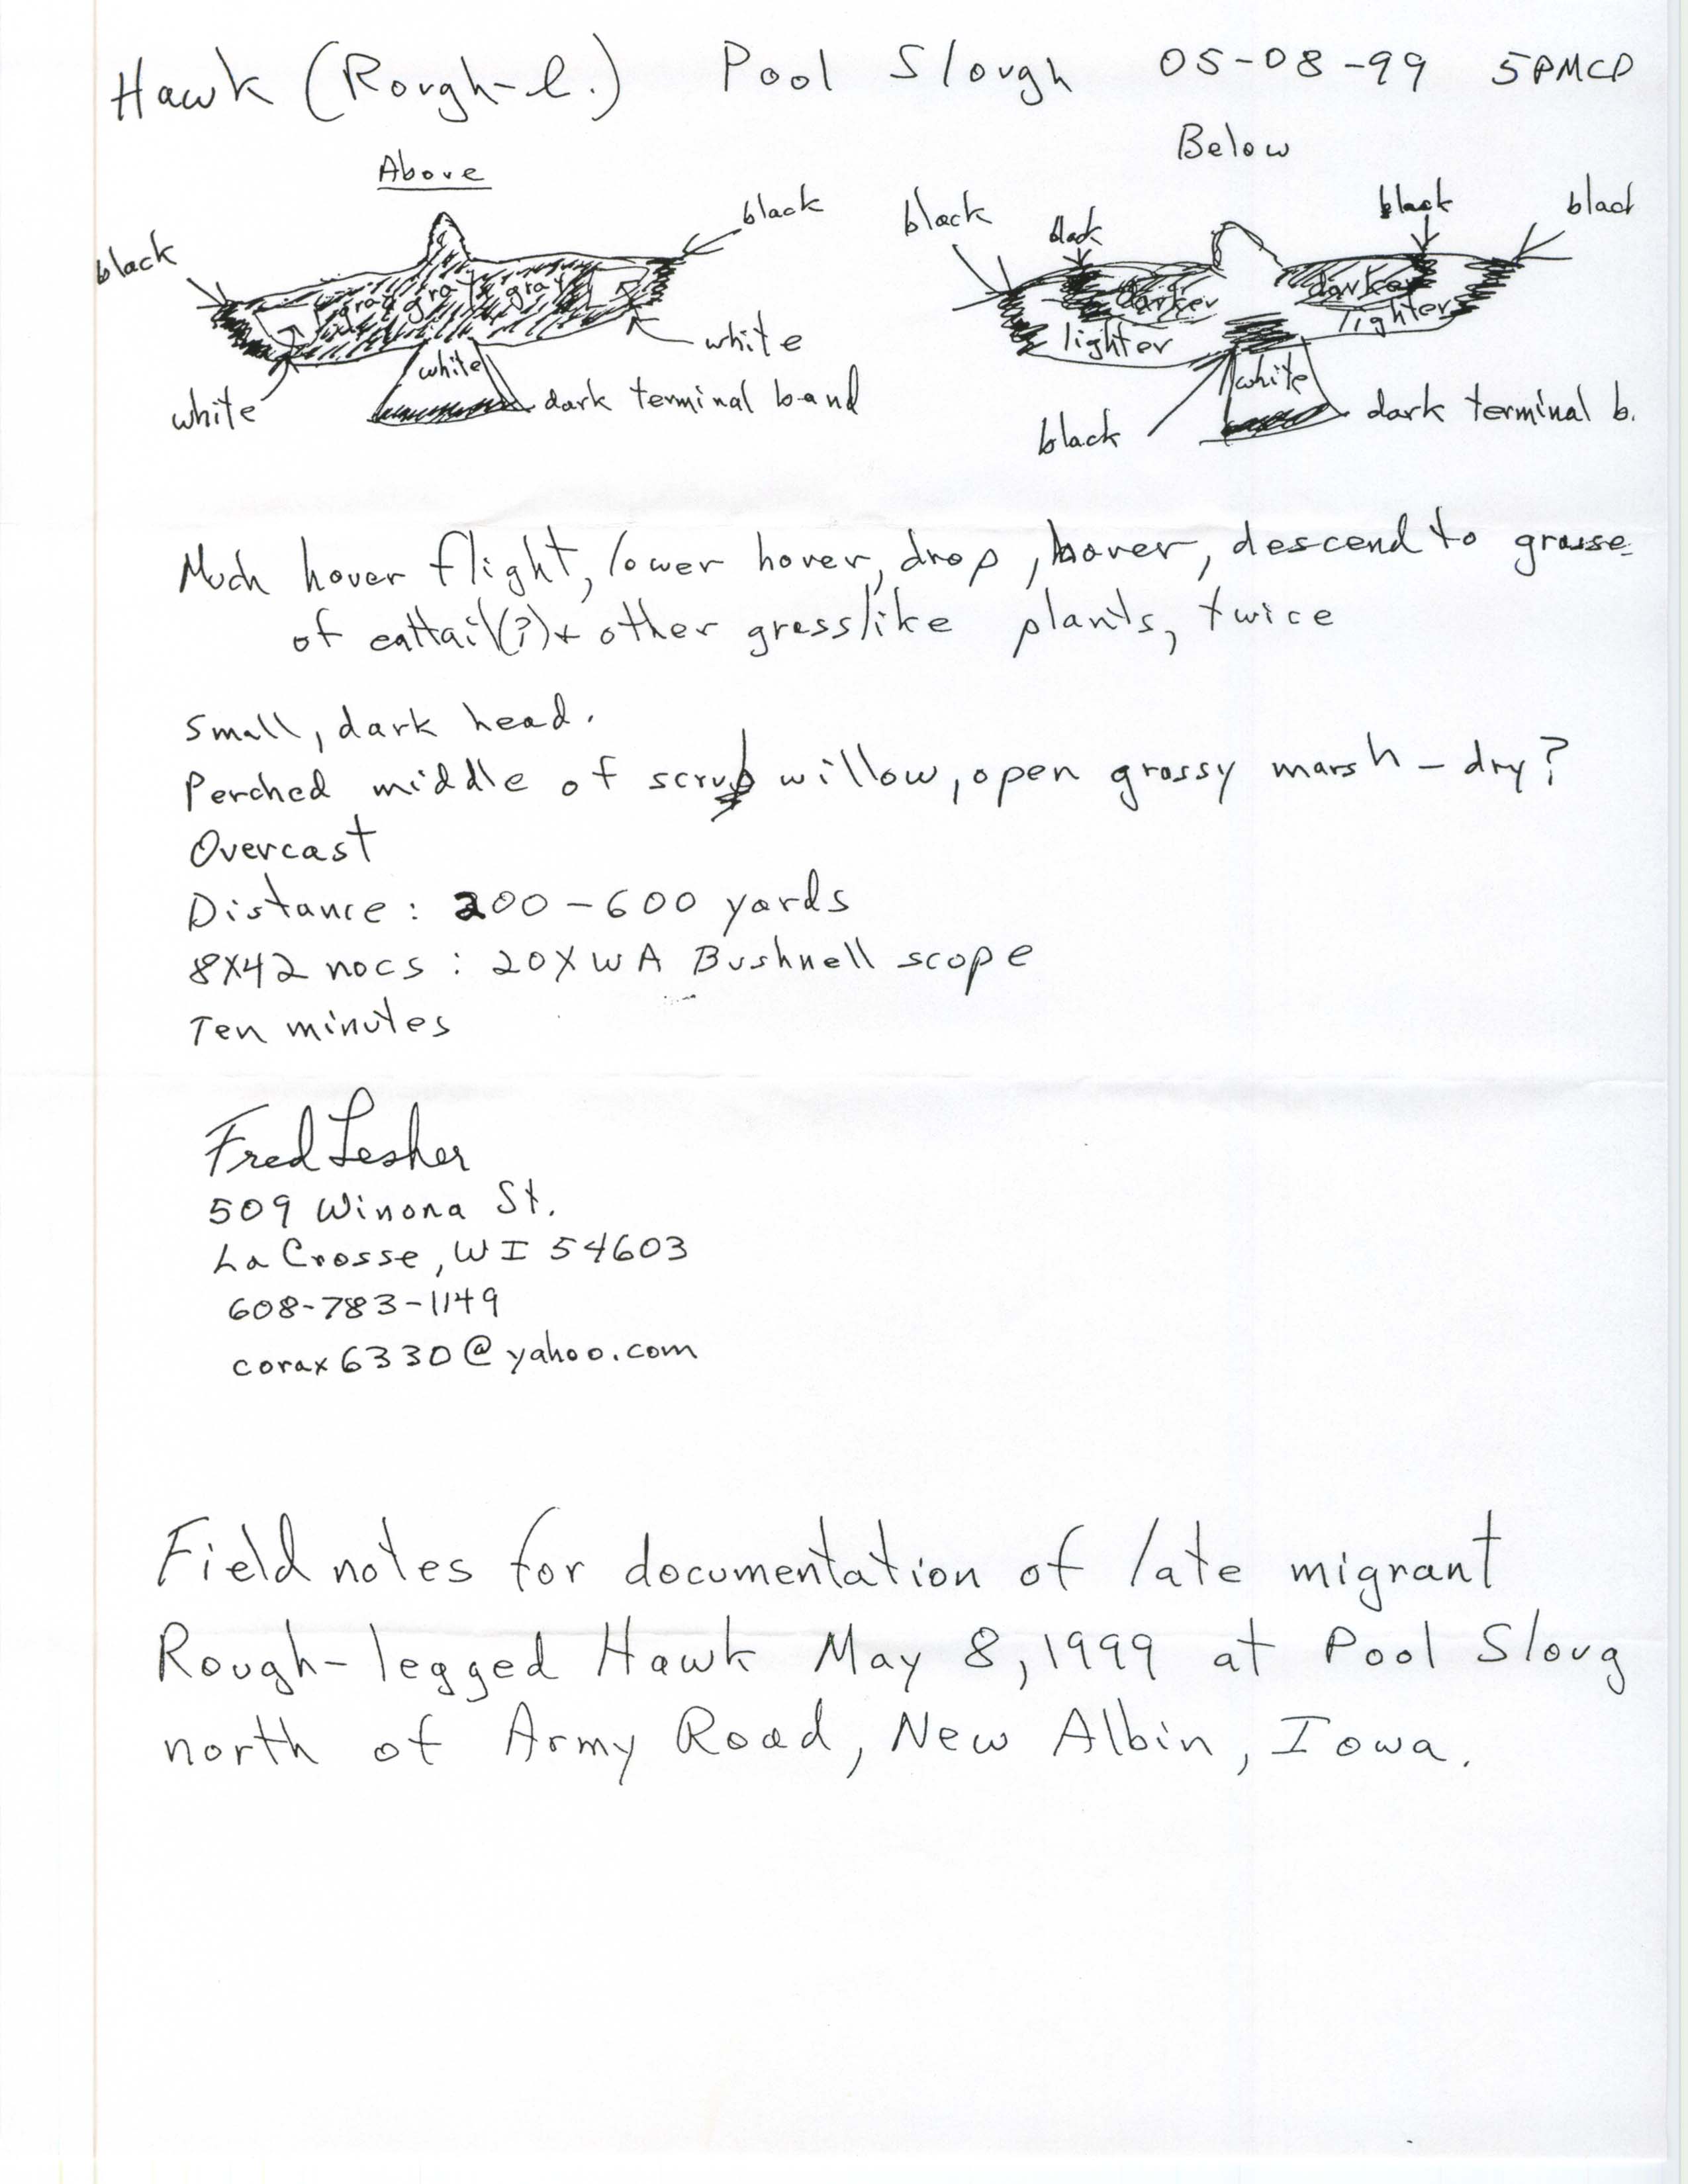 Rare bird documentation form for Rough-legged Hawk at Pool Slough, 1999